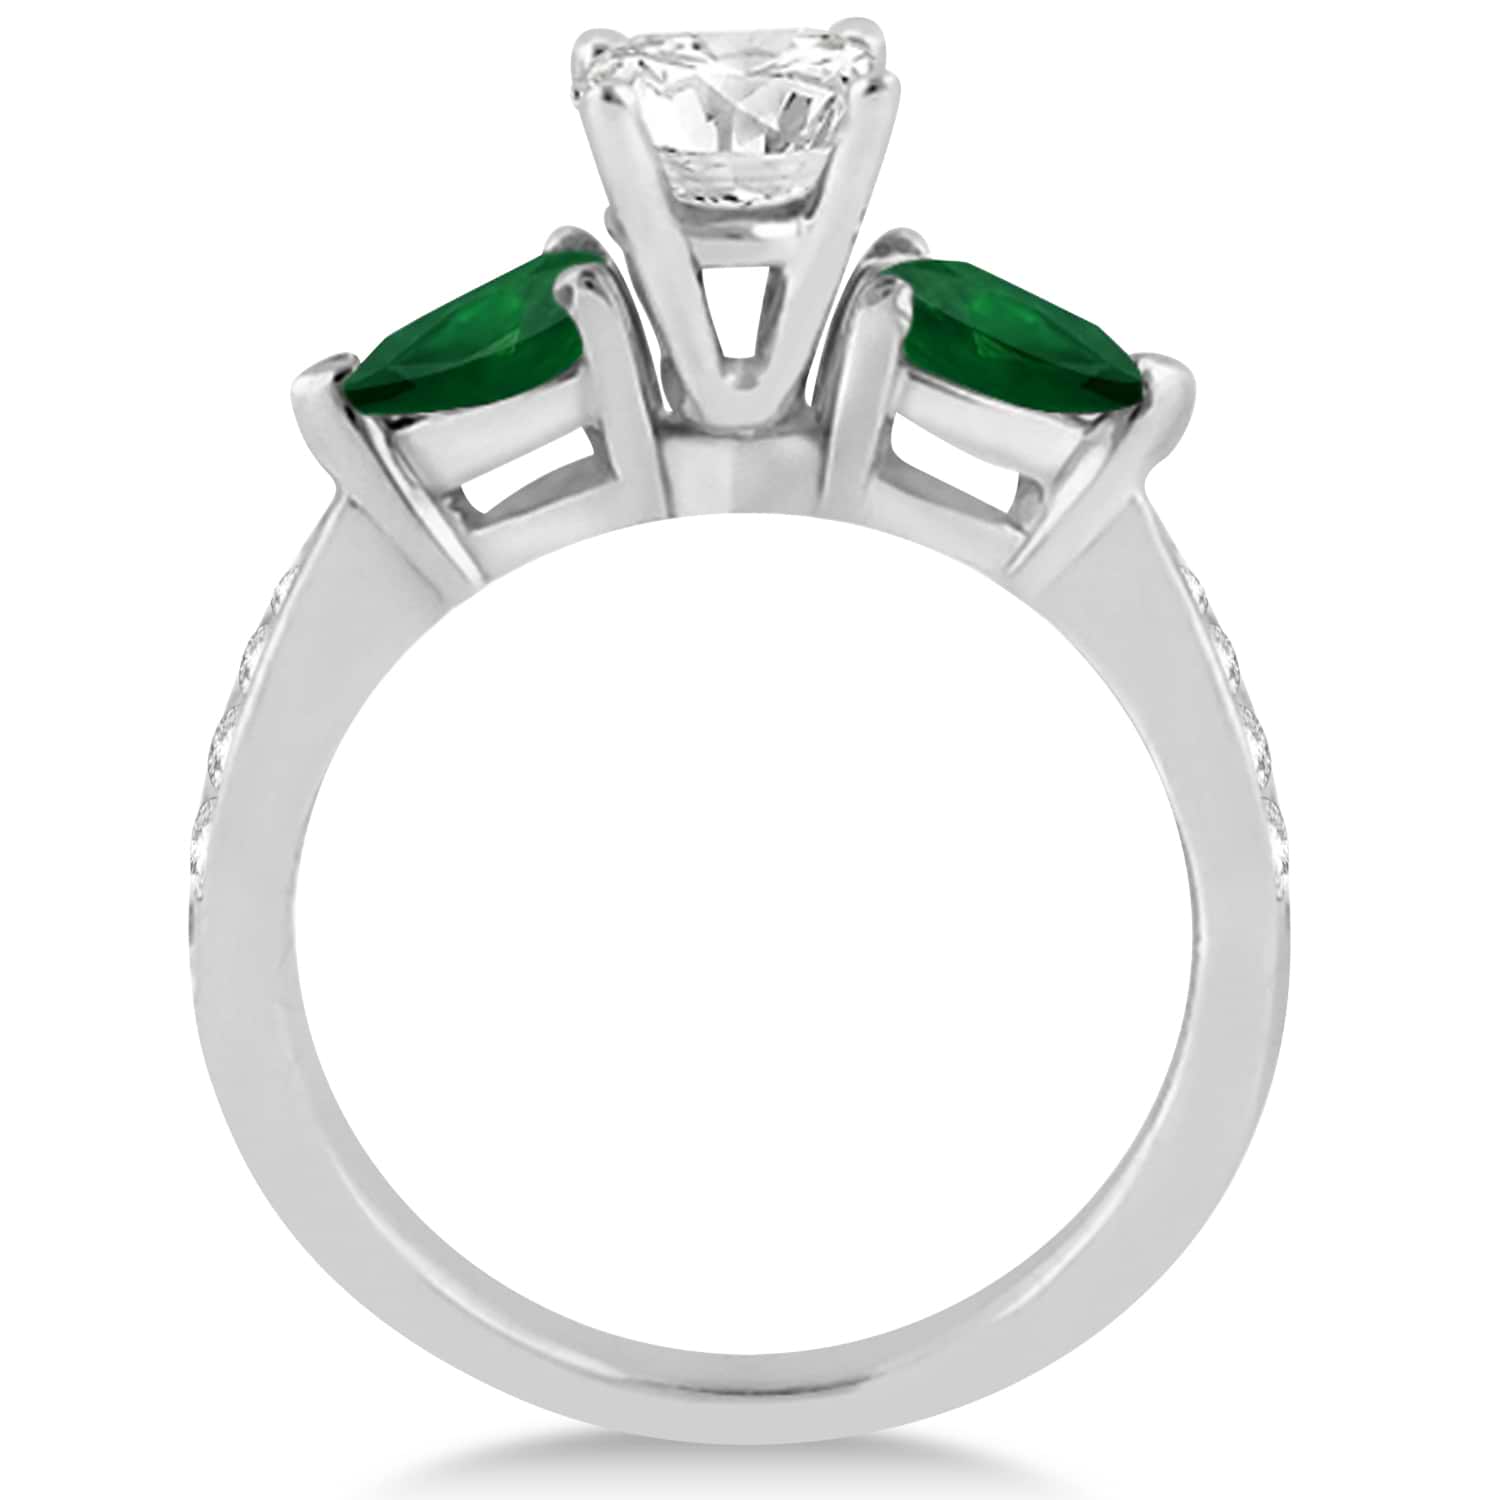 Round Diamond & Pear Green Emerald Engagement Ring in Palladium (1.29ct)